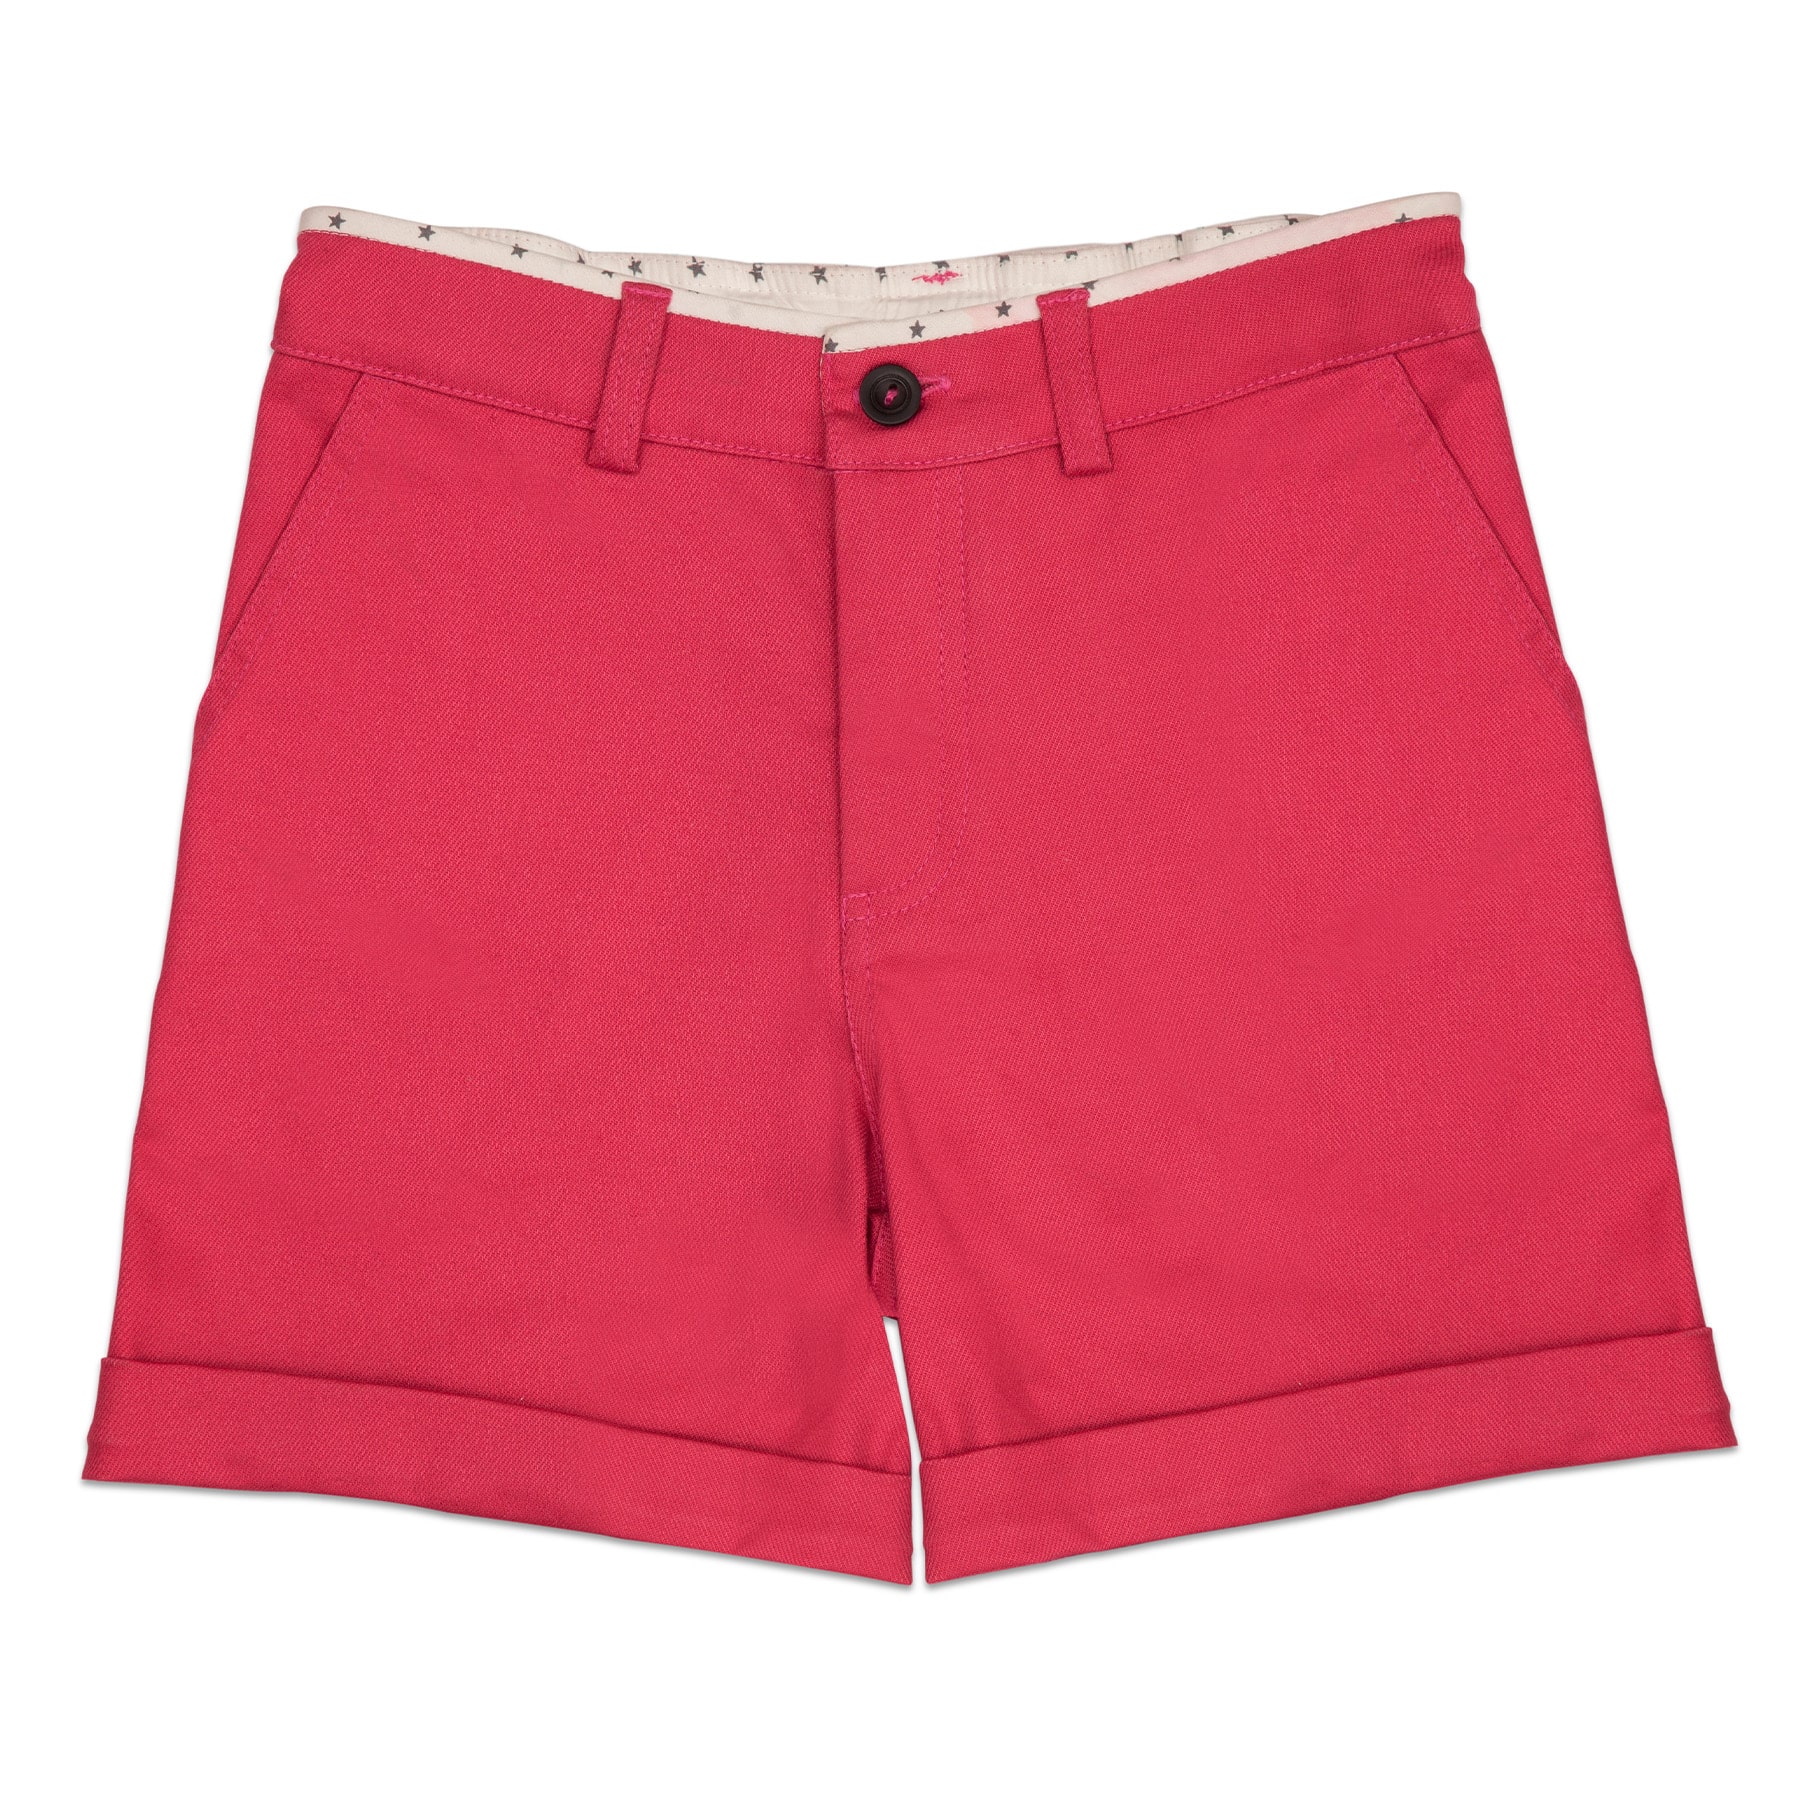 Cherry red cotton summer cuff shorts for boys by the children's fashion brand La Faute à Voltaire